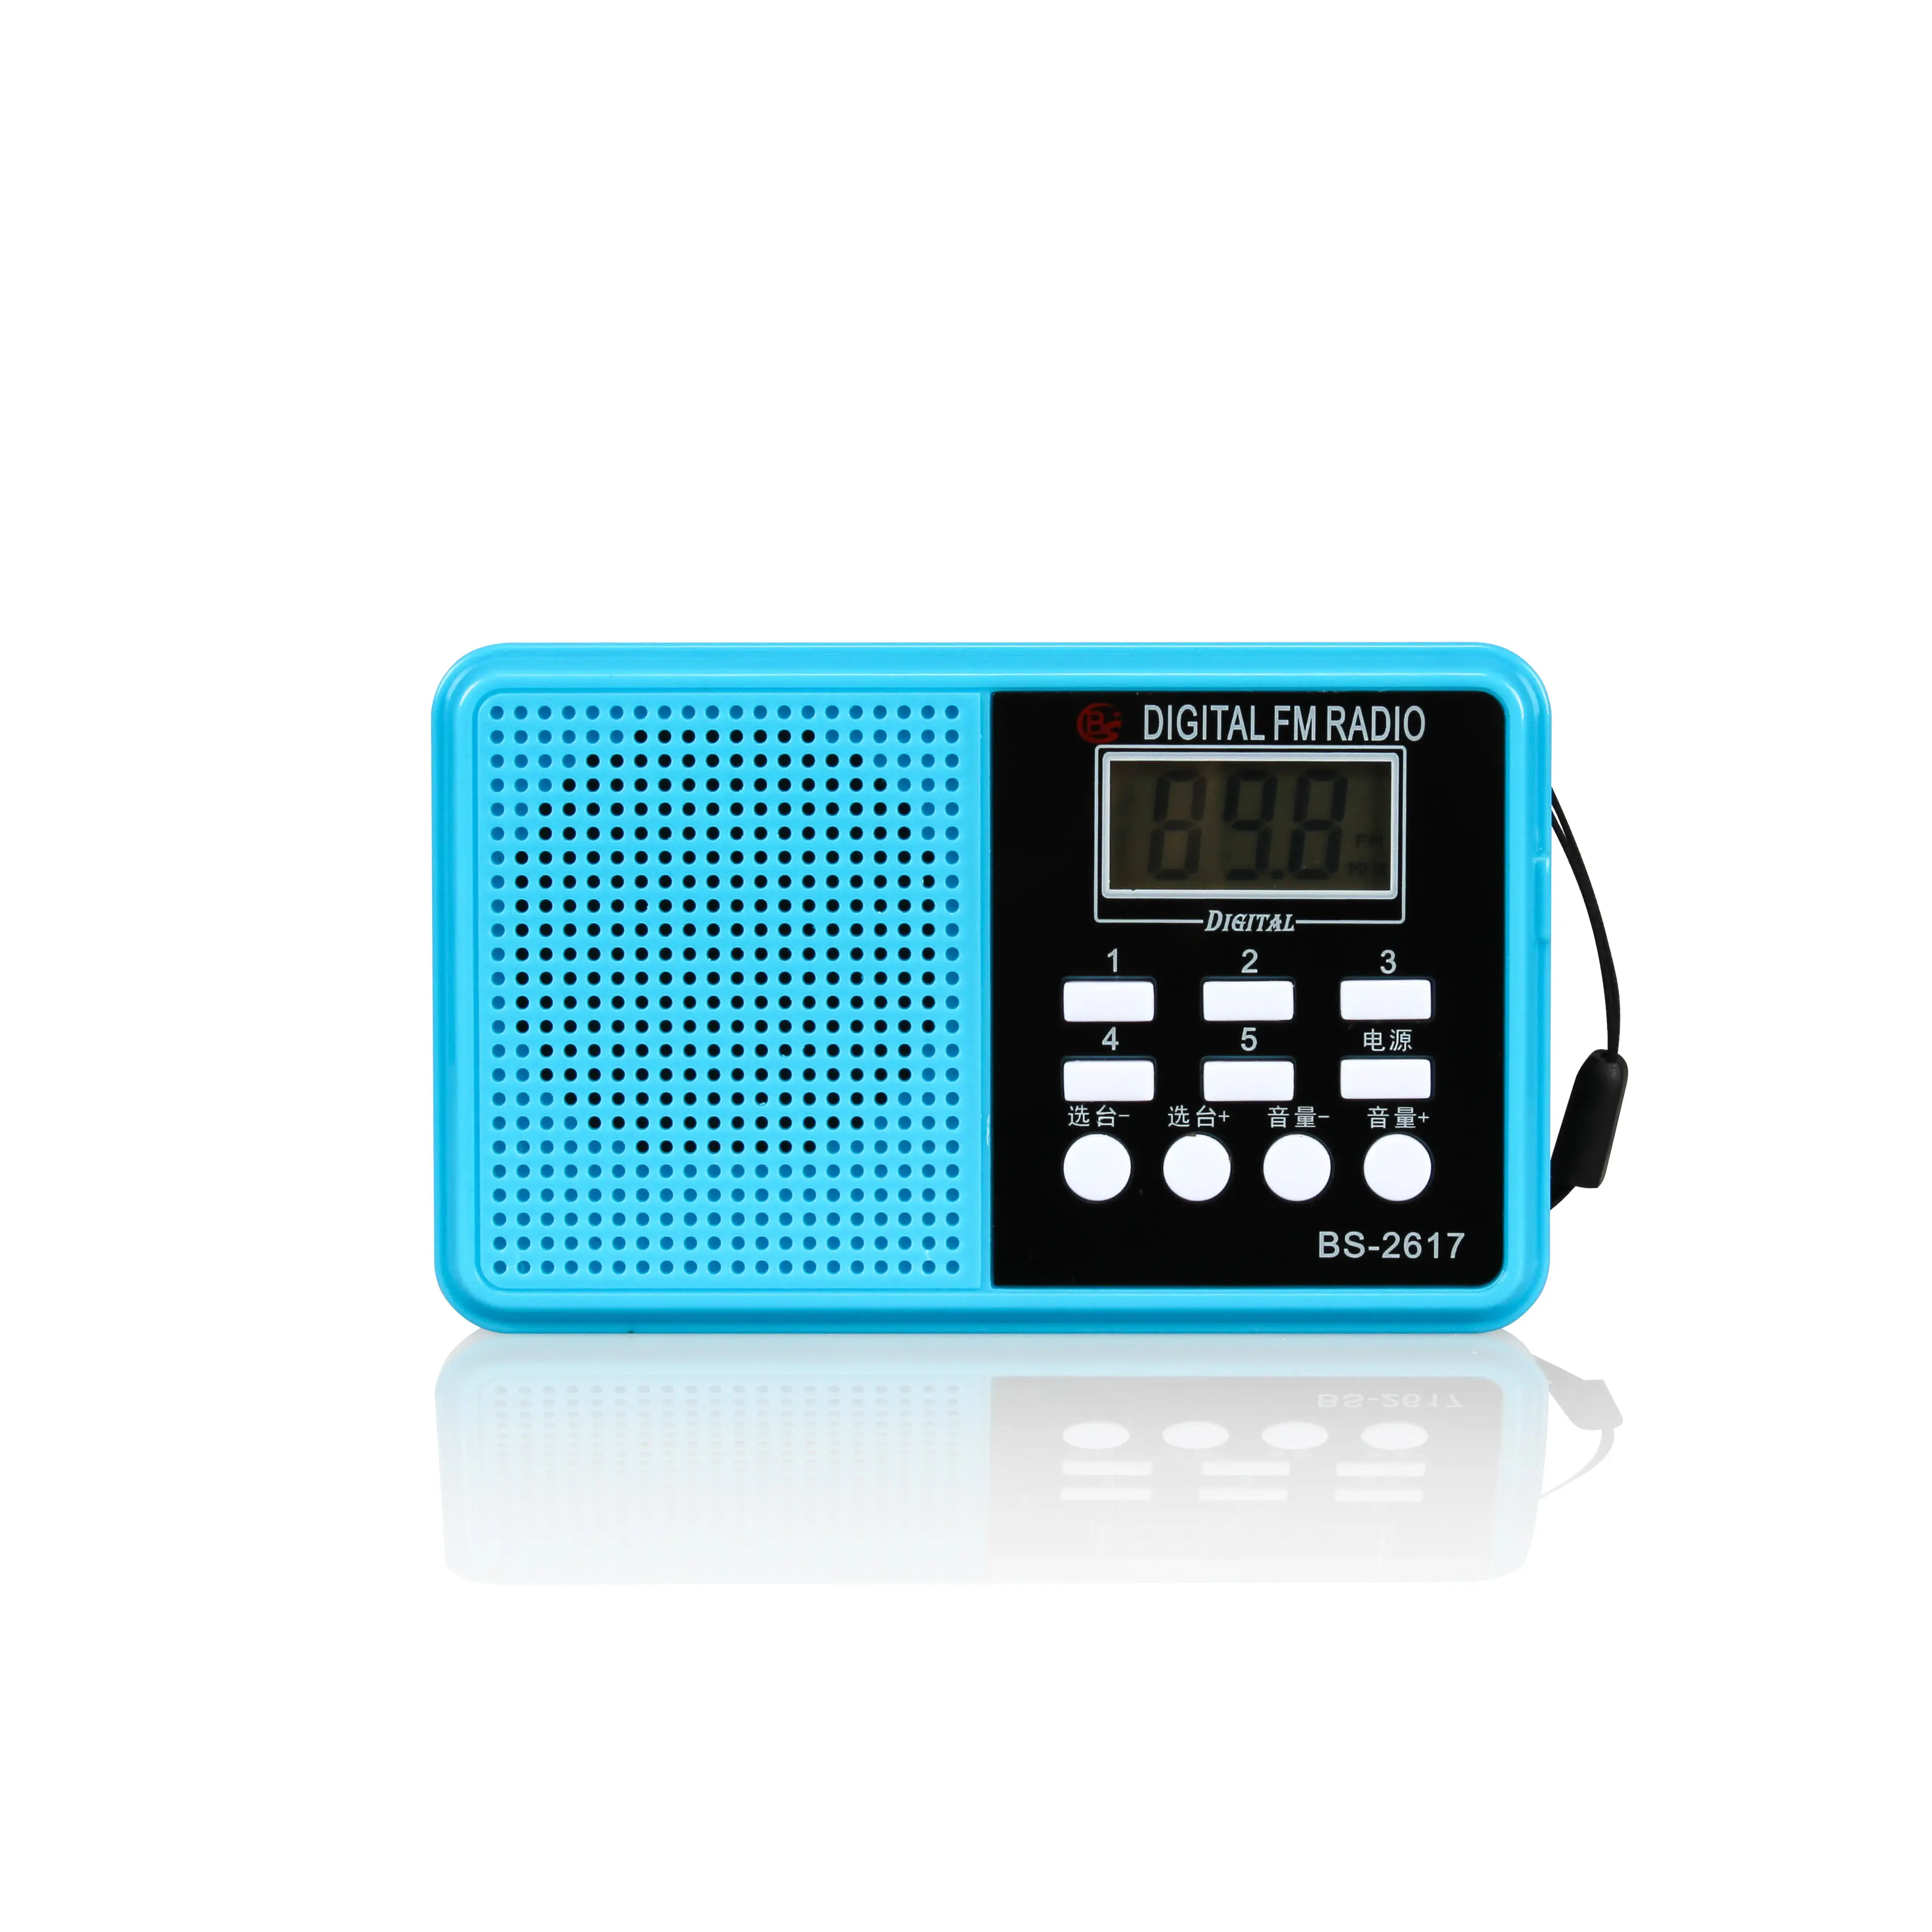 Mini radio FM Portable, sans fil, avec écran LCD Hd